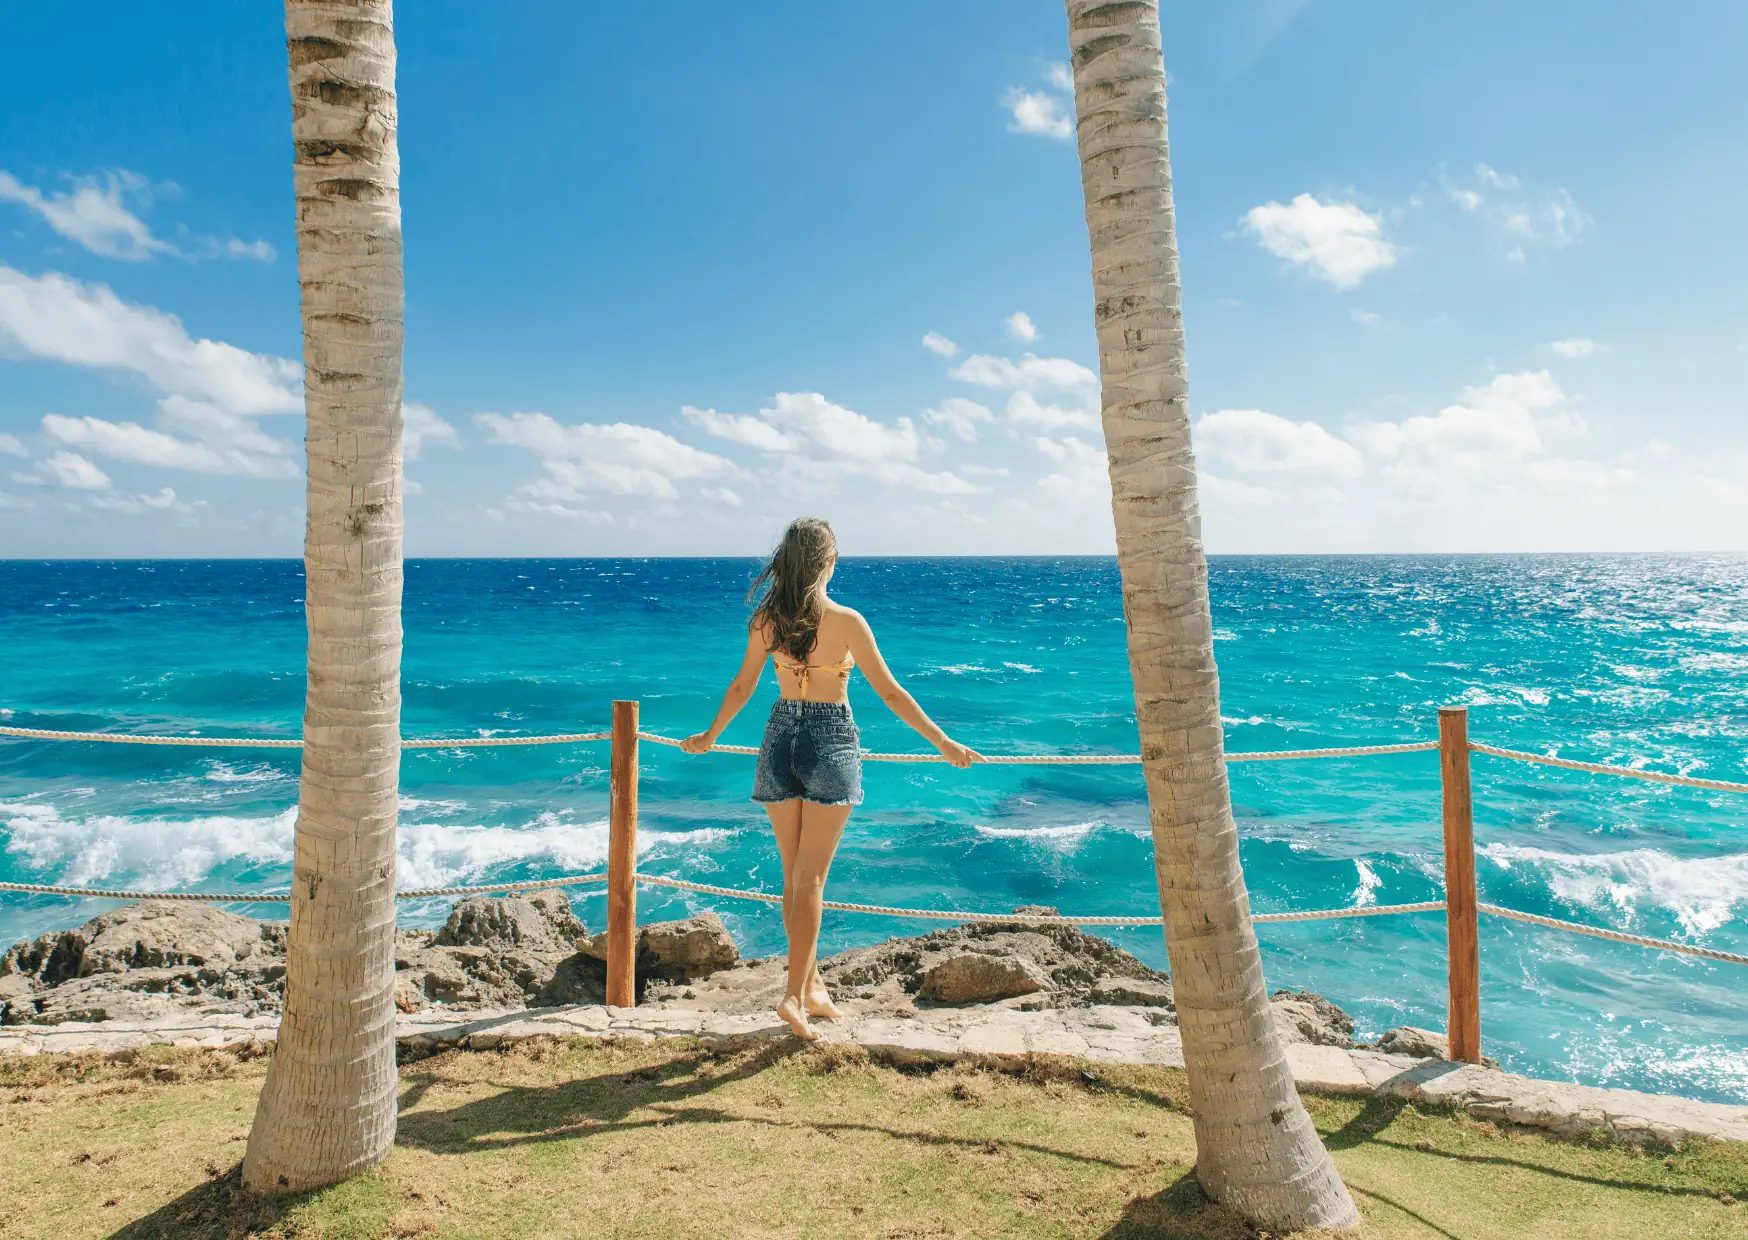 Playa Gaviota Azul in Cancun, Aruba vs Cancun - Which is the Better Beach Trip?